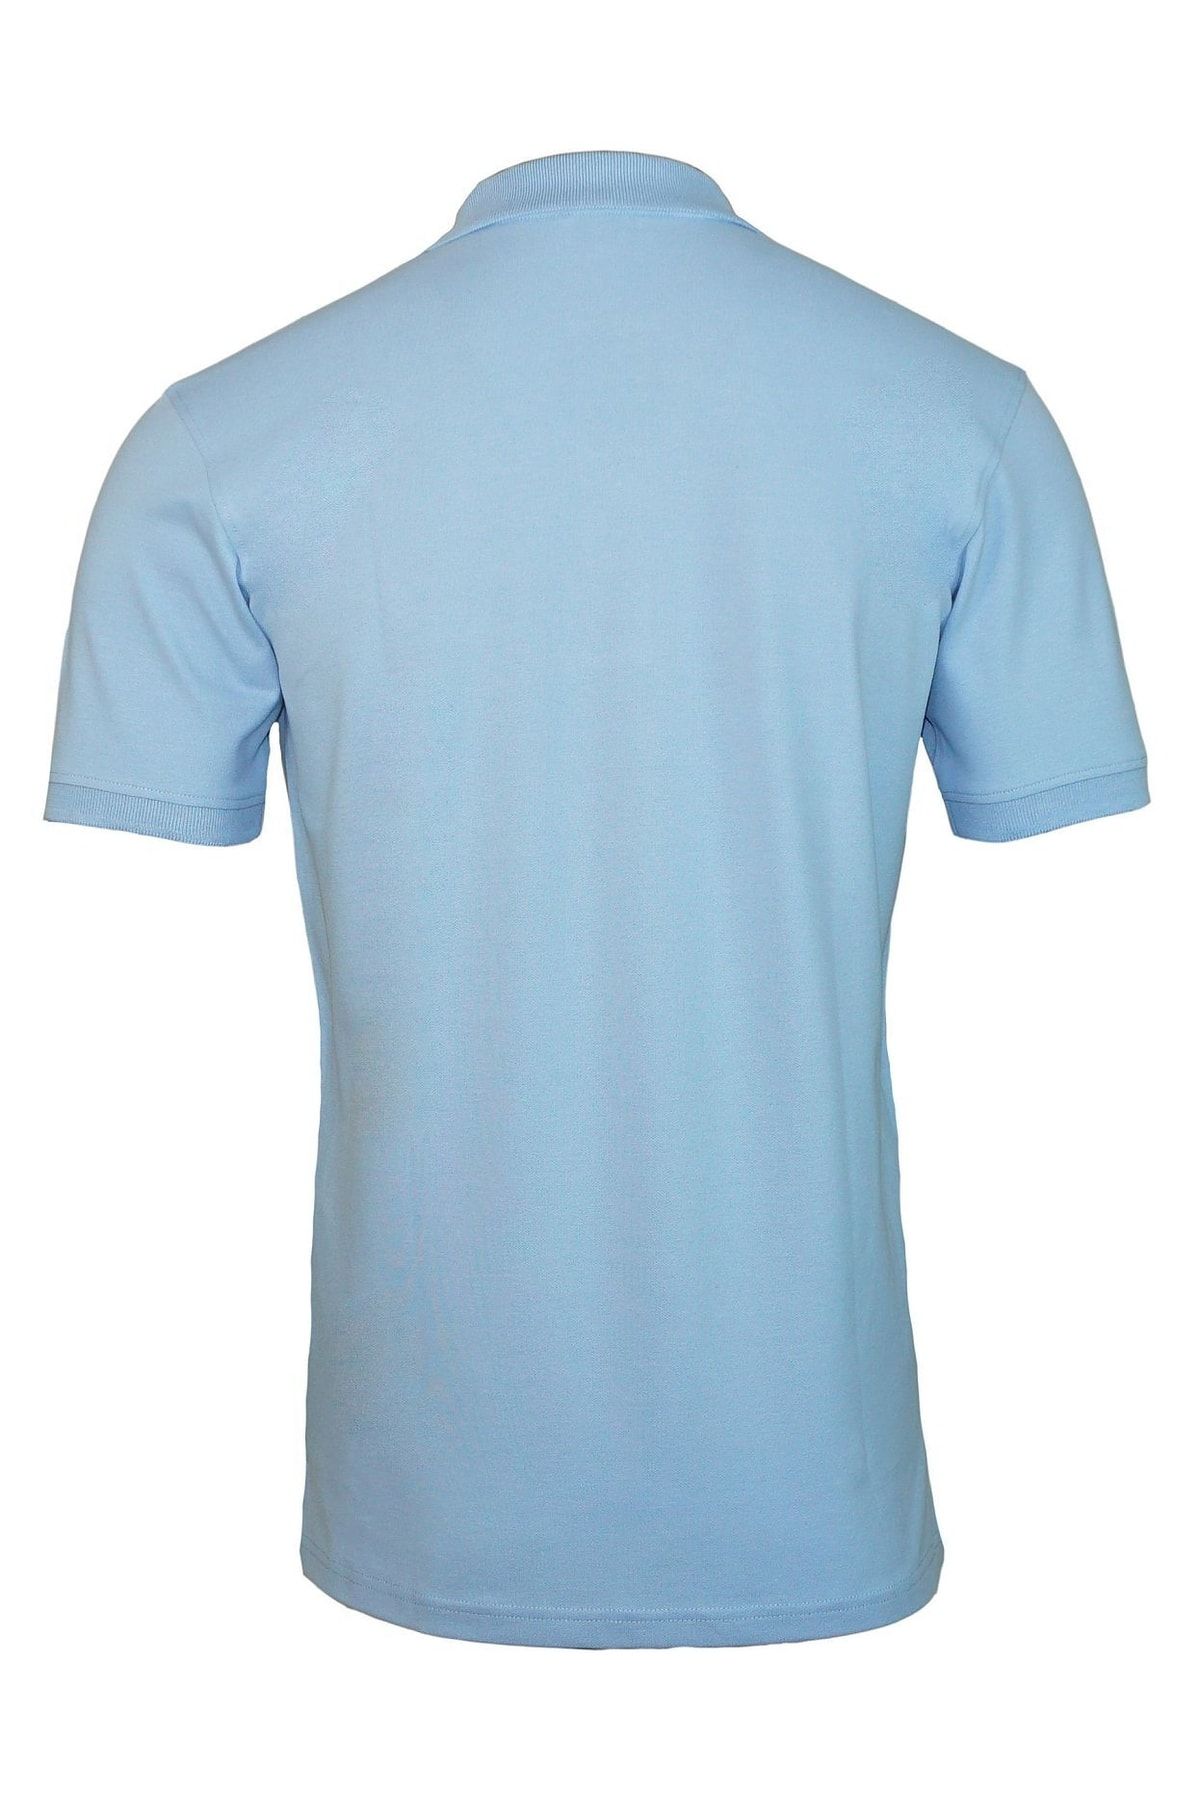 - Fit - U.S. Trendyol - Regular Poloshirt Assn. Blau Polo